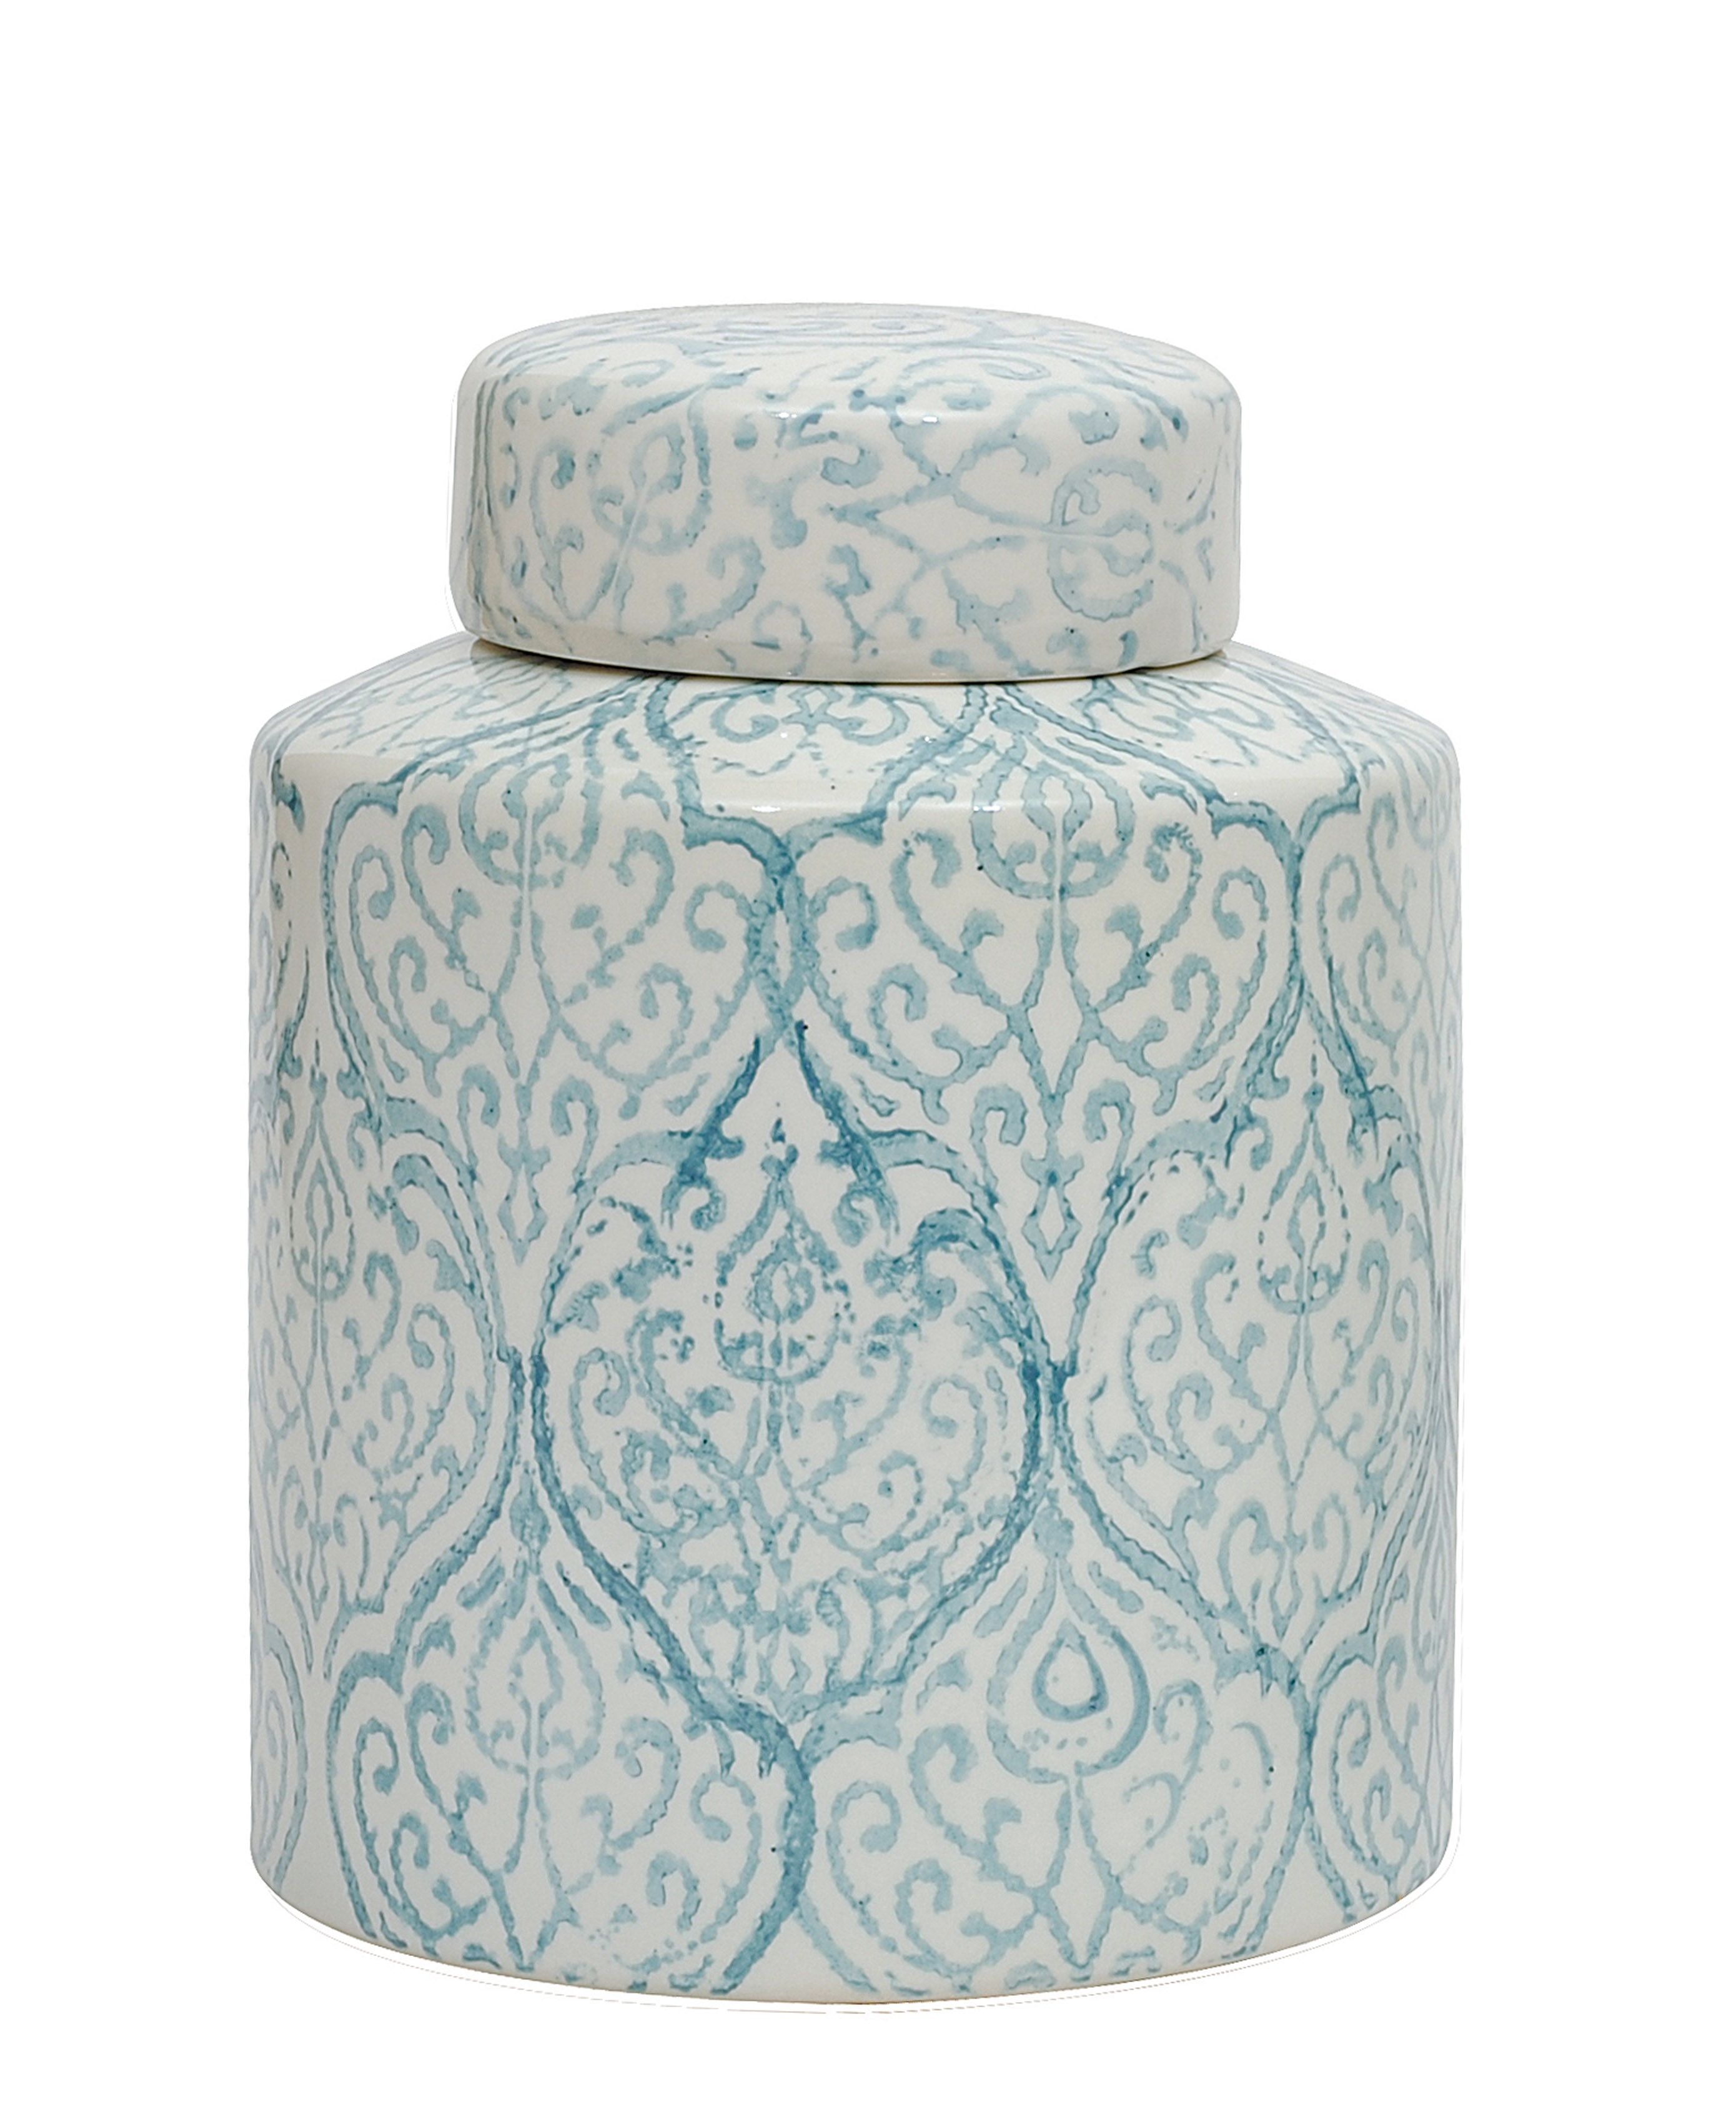 Blue & White Decorative Ceramic Ginger Jar with Lid - Image 0